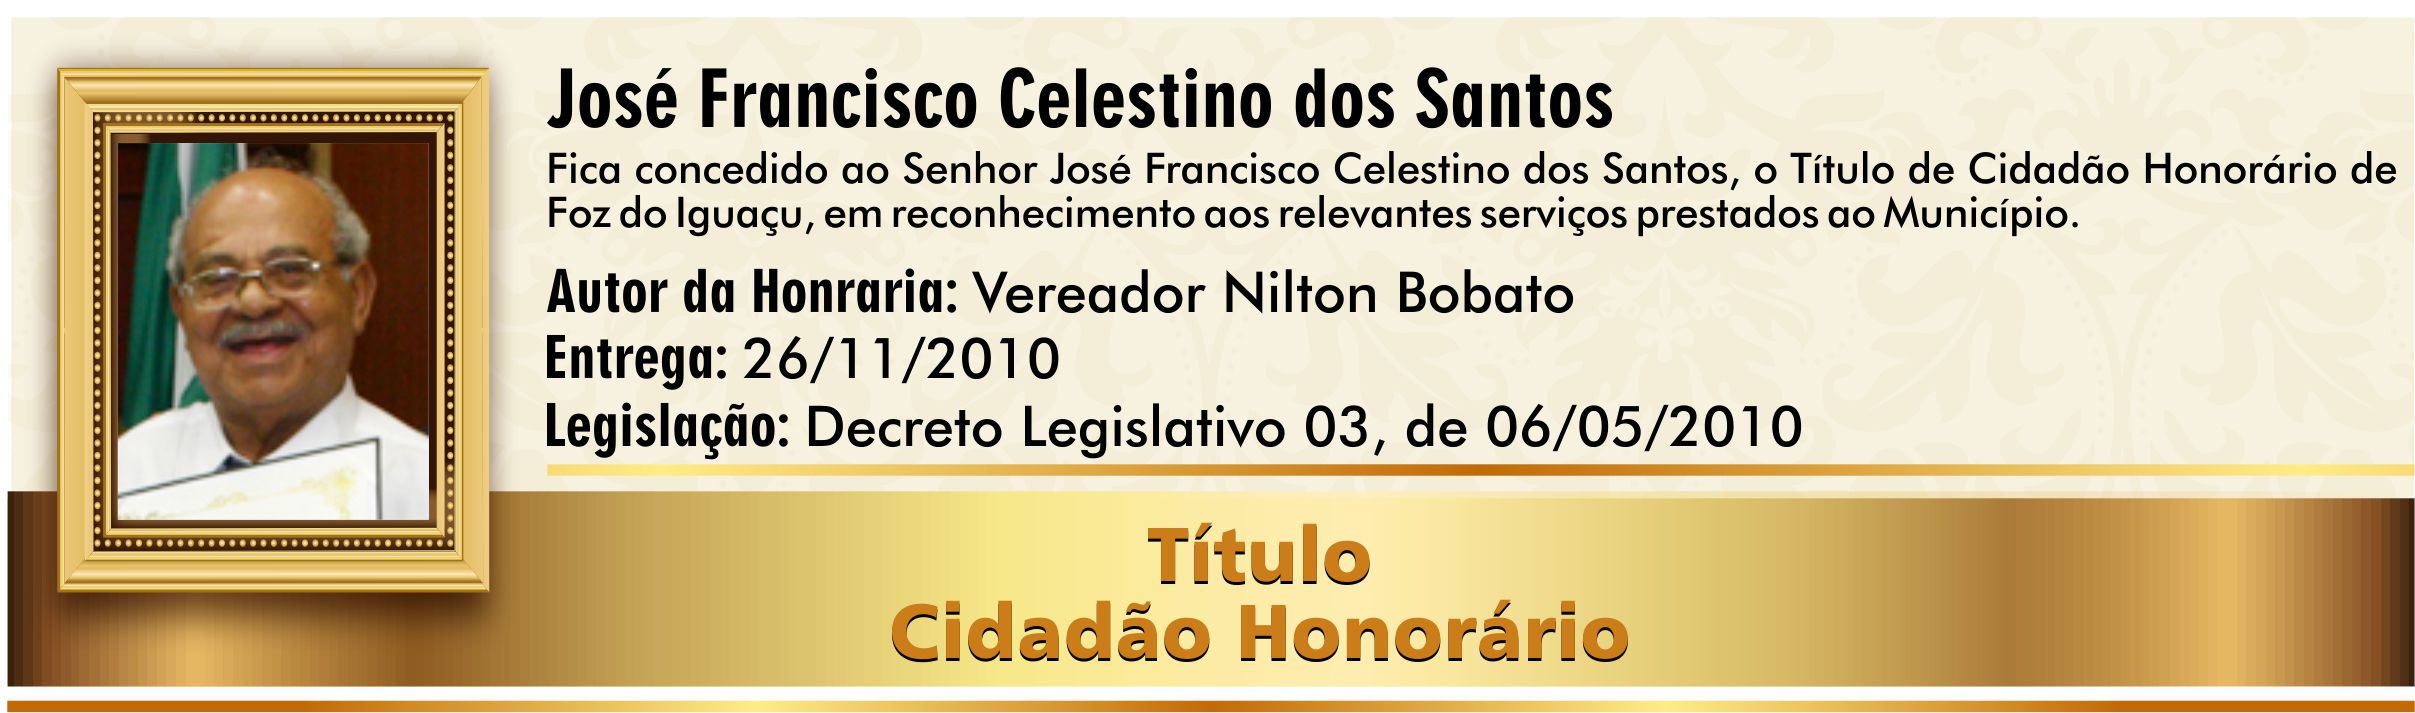 José Francisco Celestino dos Santos